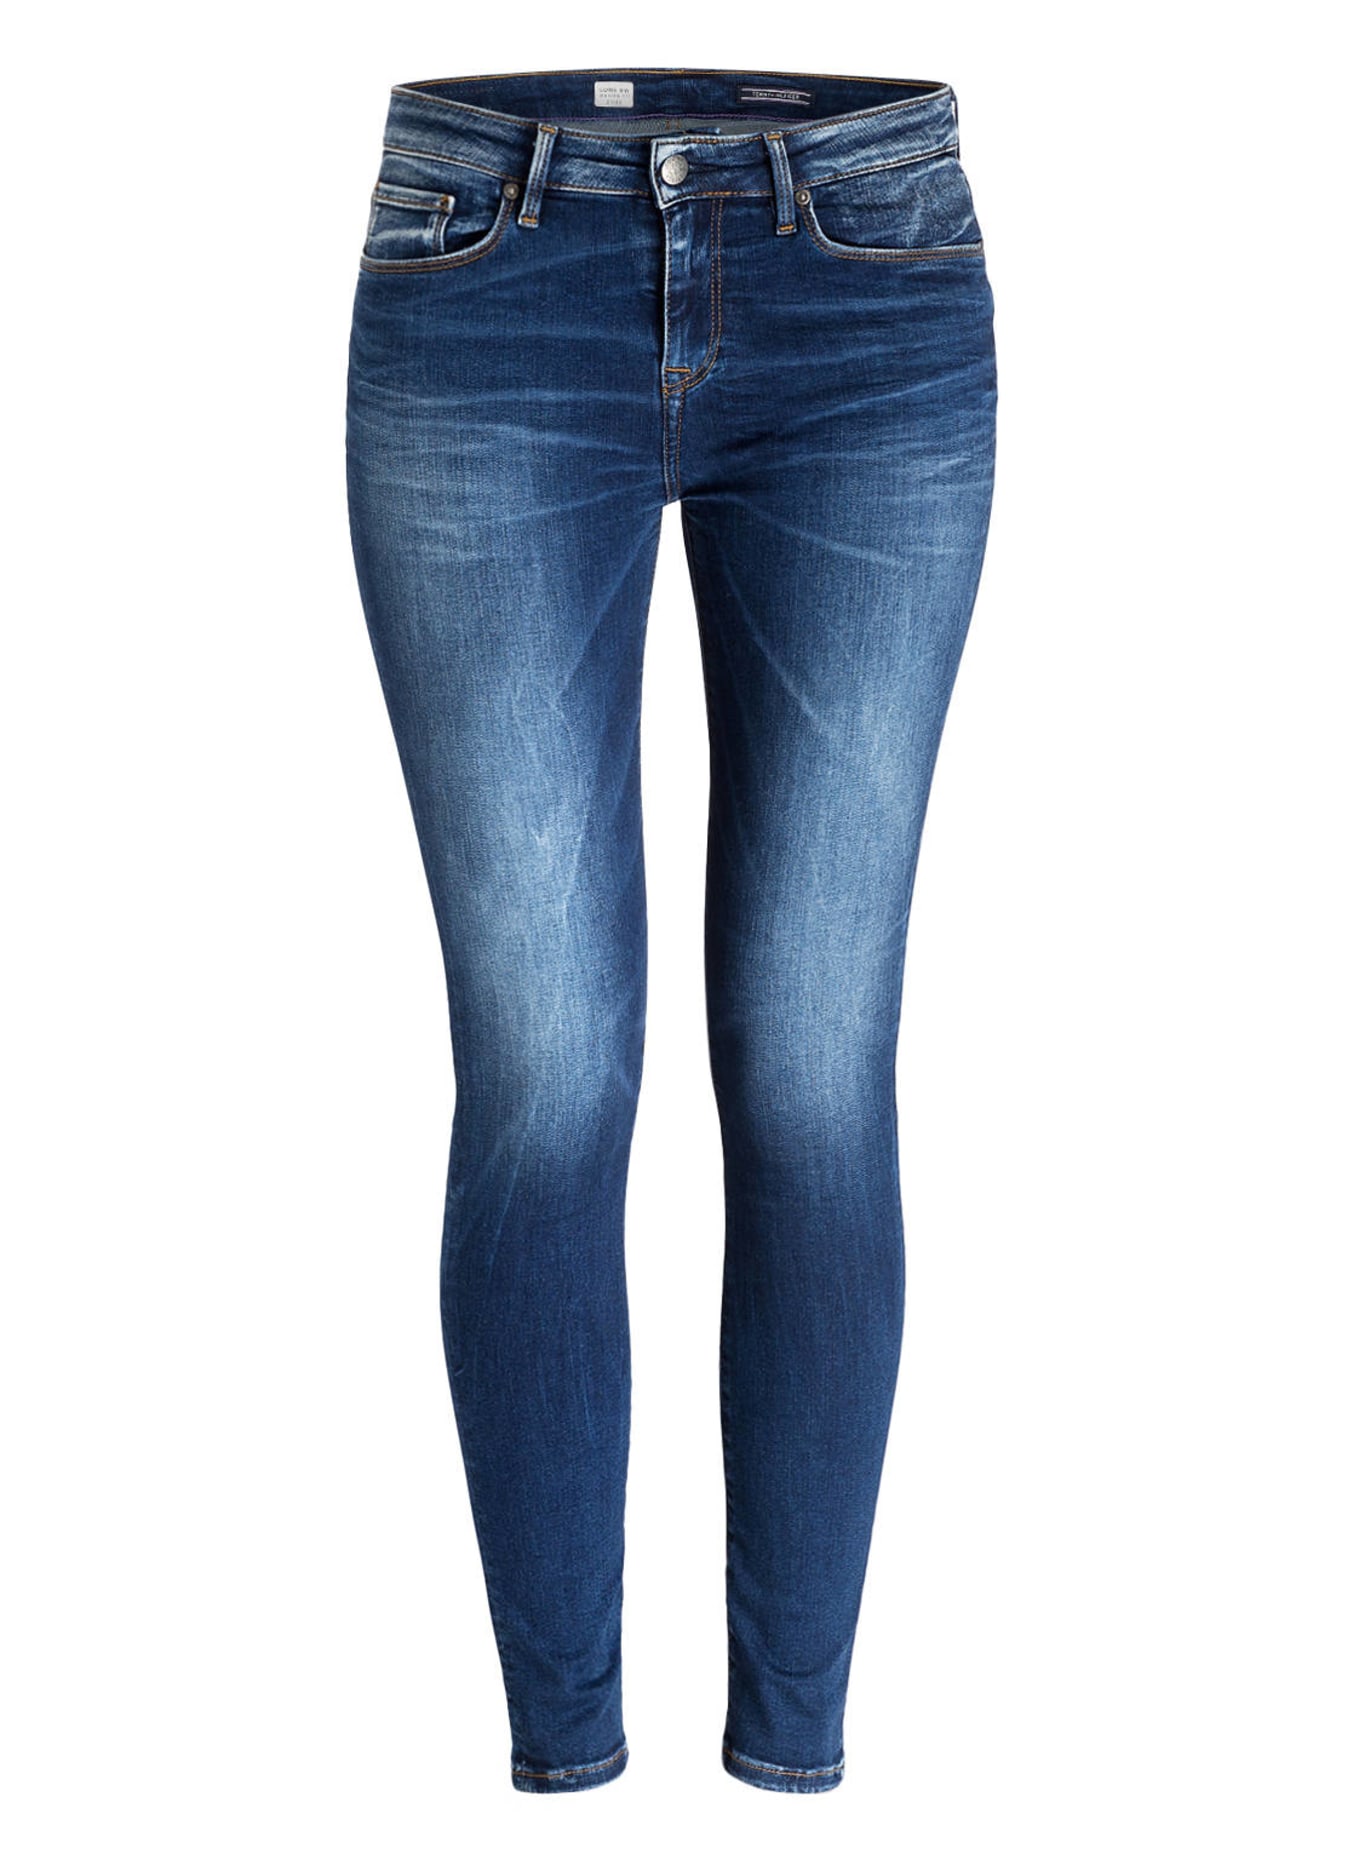 TOMMY HILFIGER Jeans DOREEN, Farbe: 410 DOREEN (Bild 1)